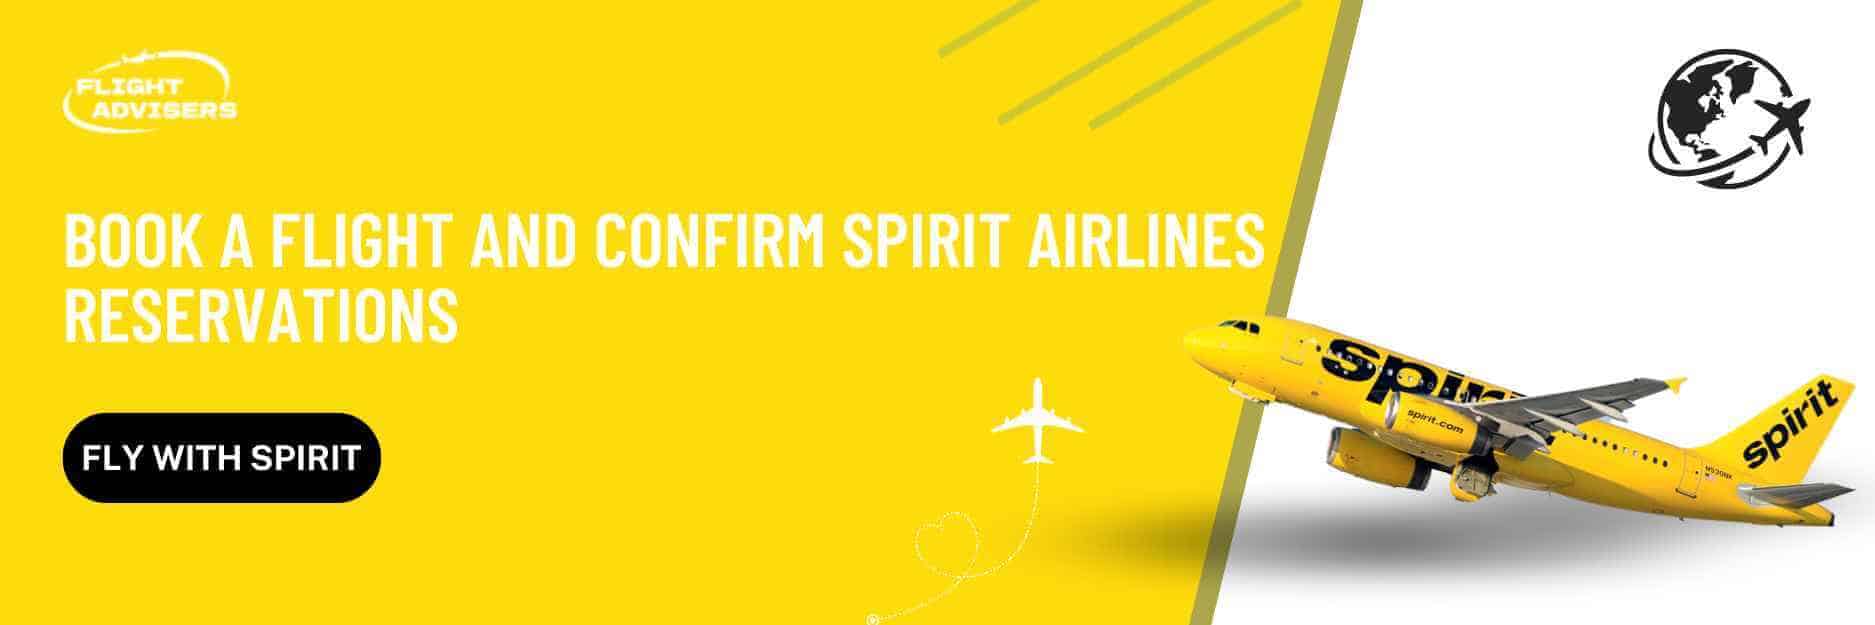 spirit-airlines-flight